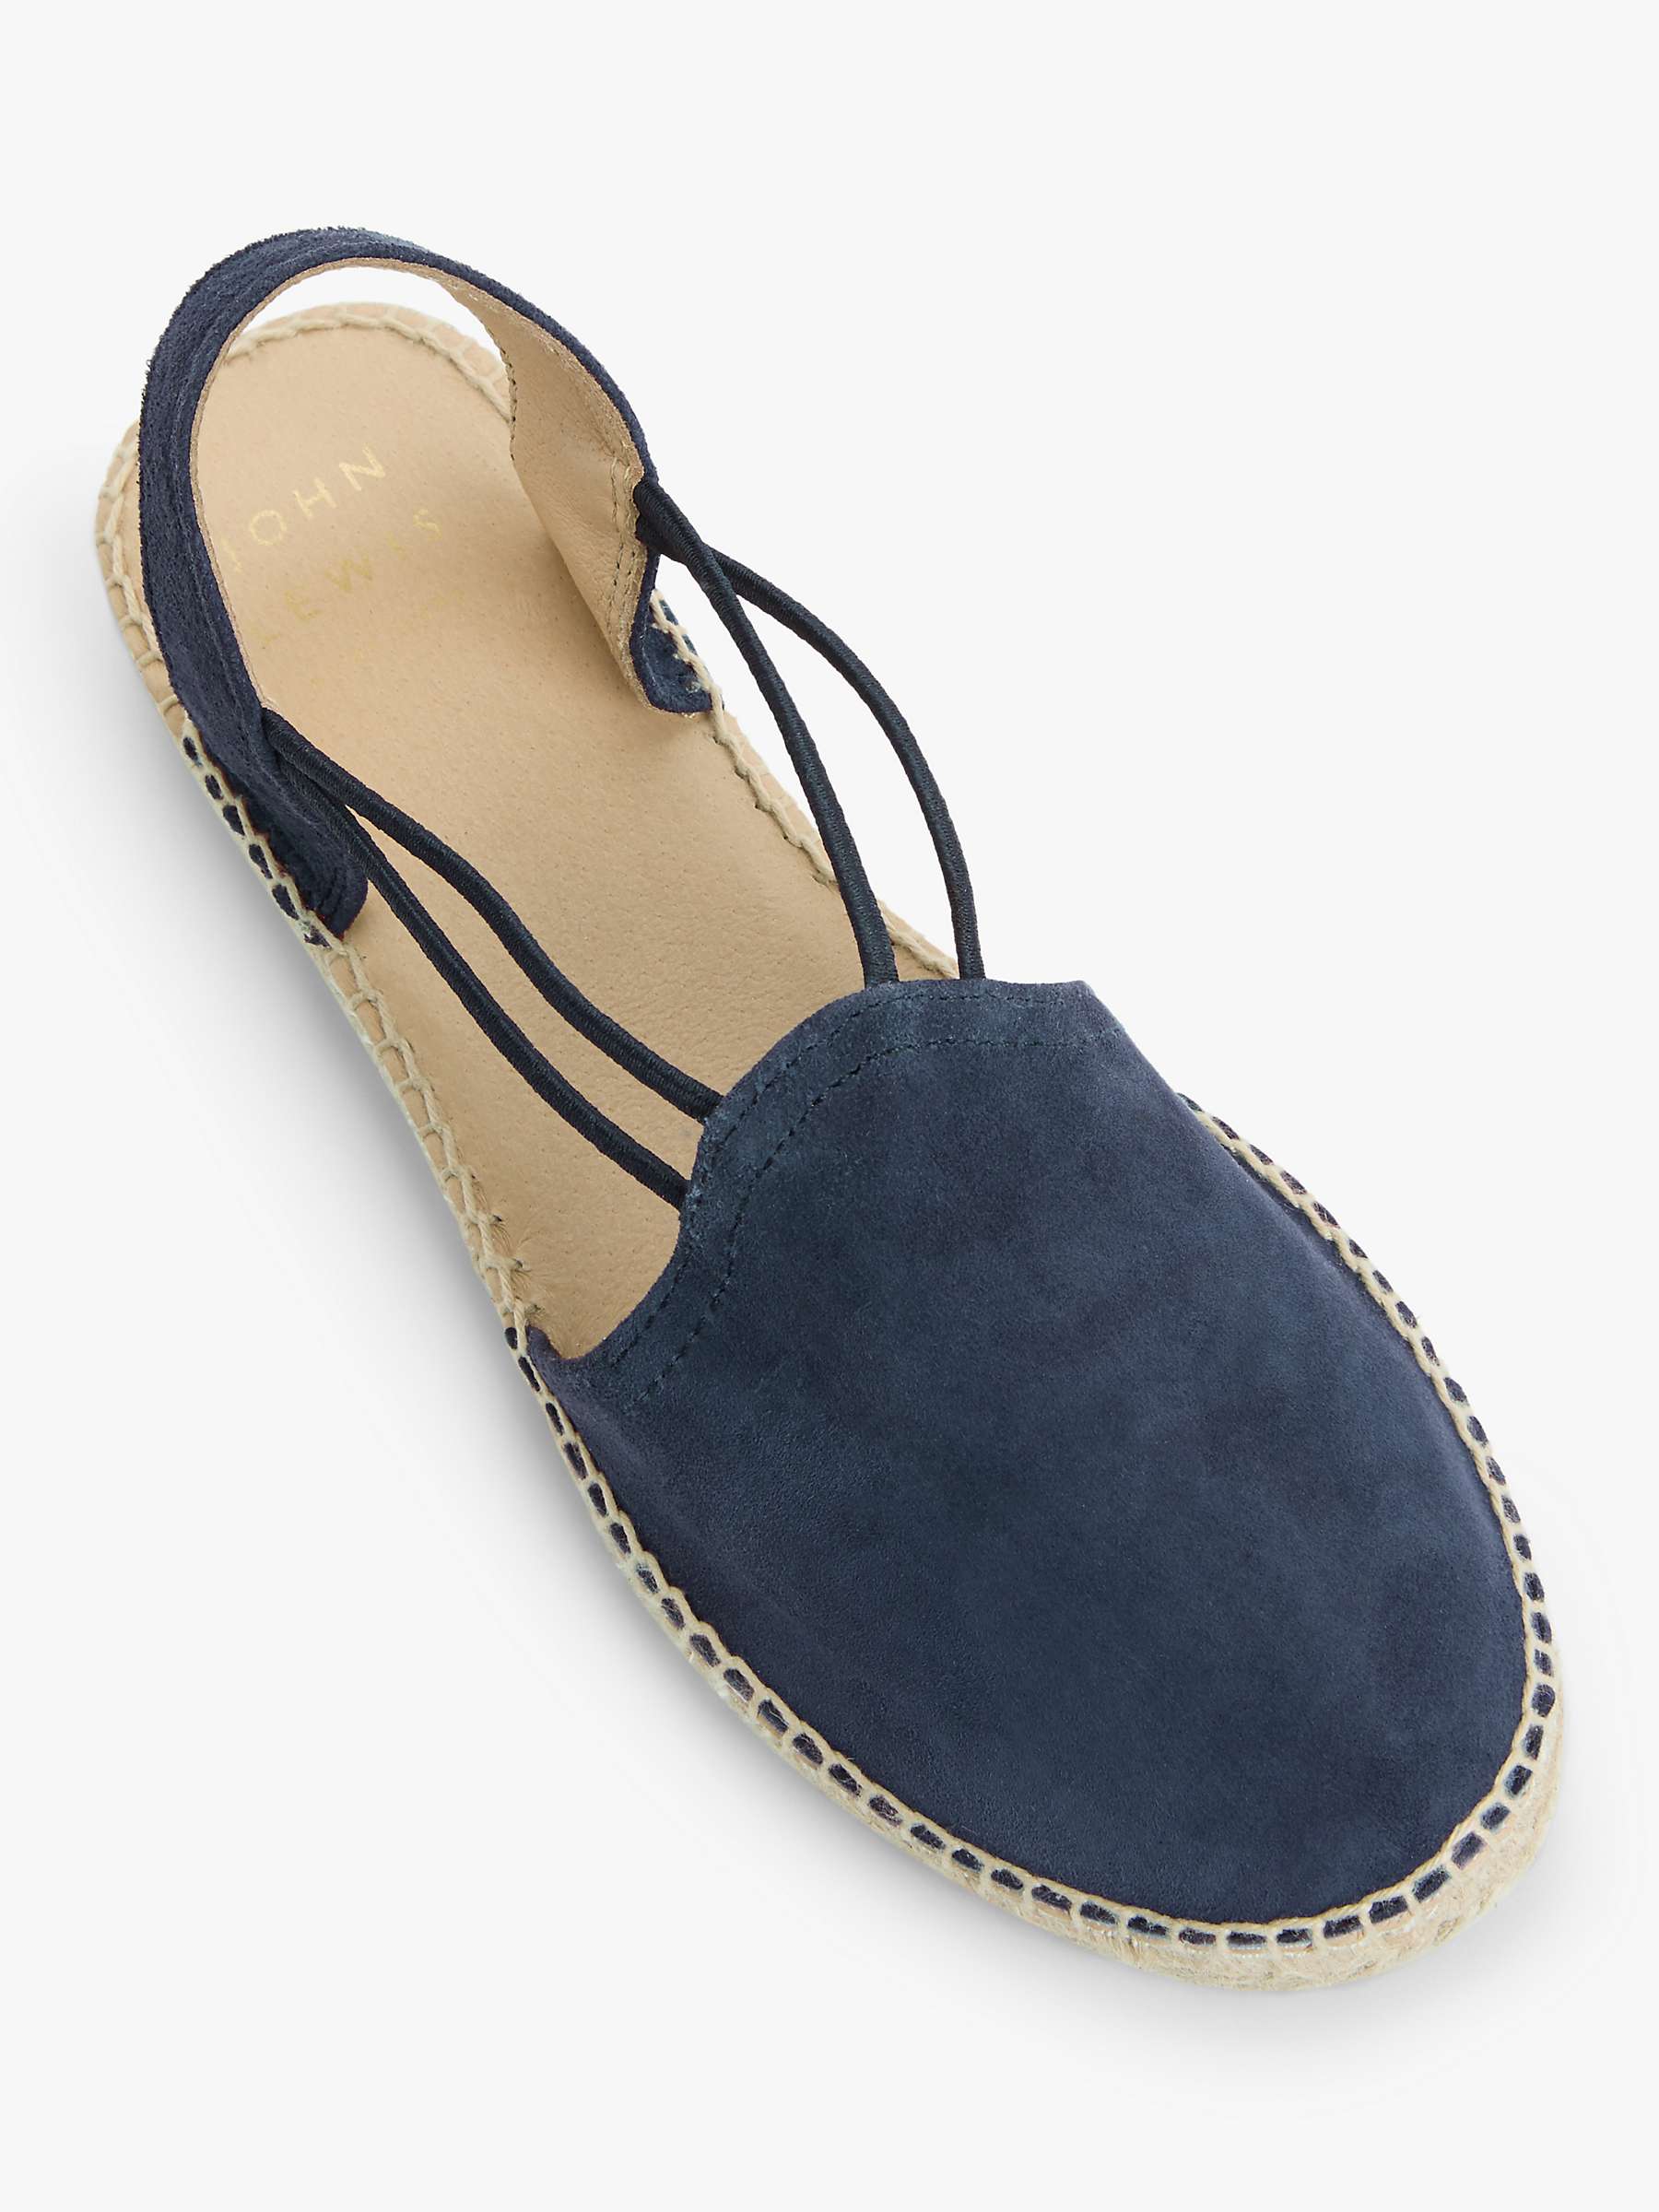 Buy John Lewis Nuria Suede Espadrille Sandals Online at johnlewis.com